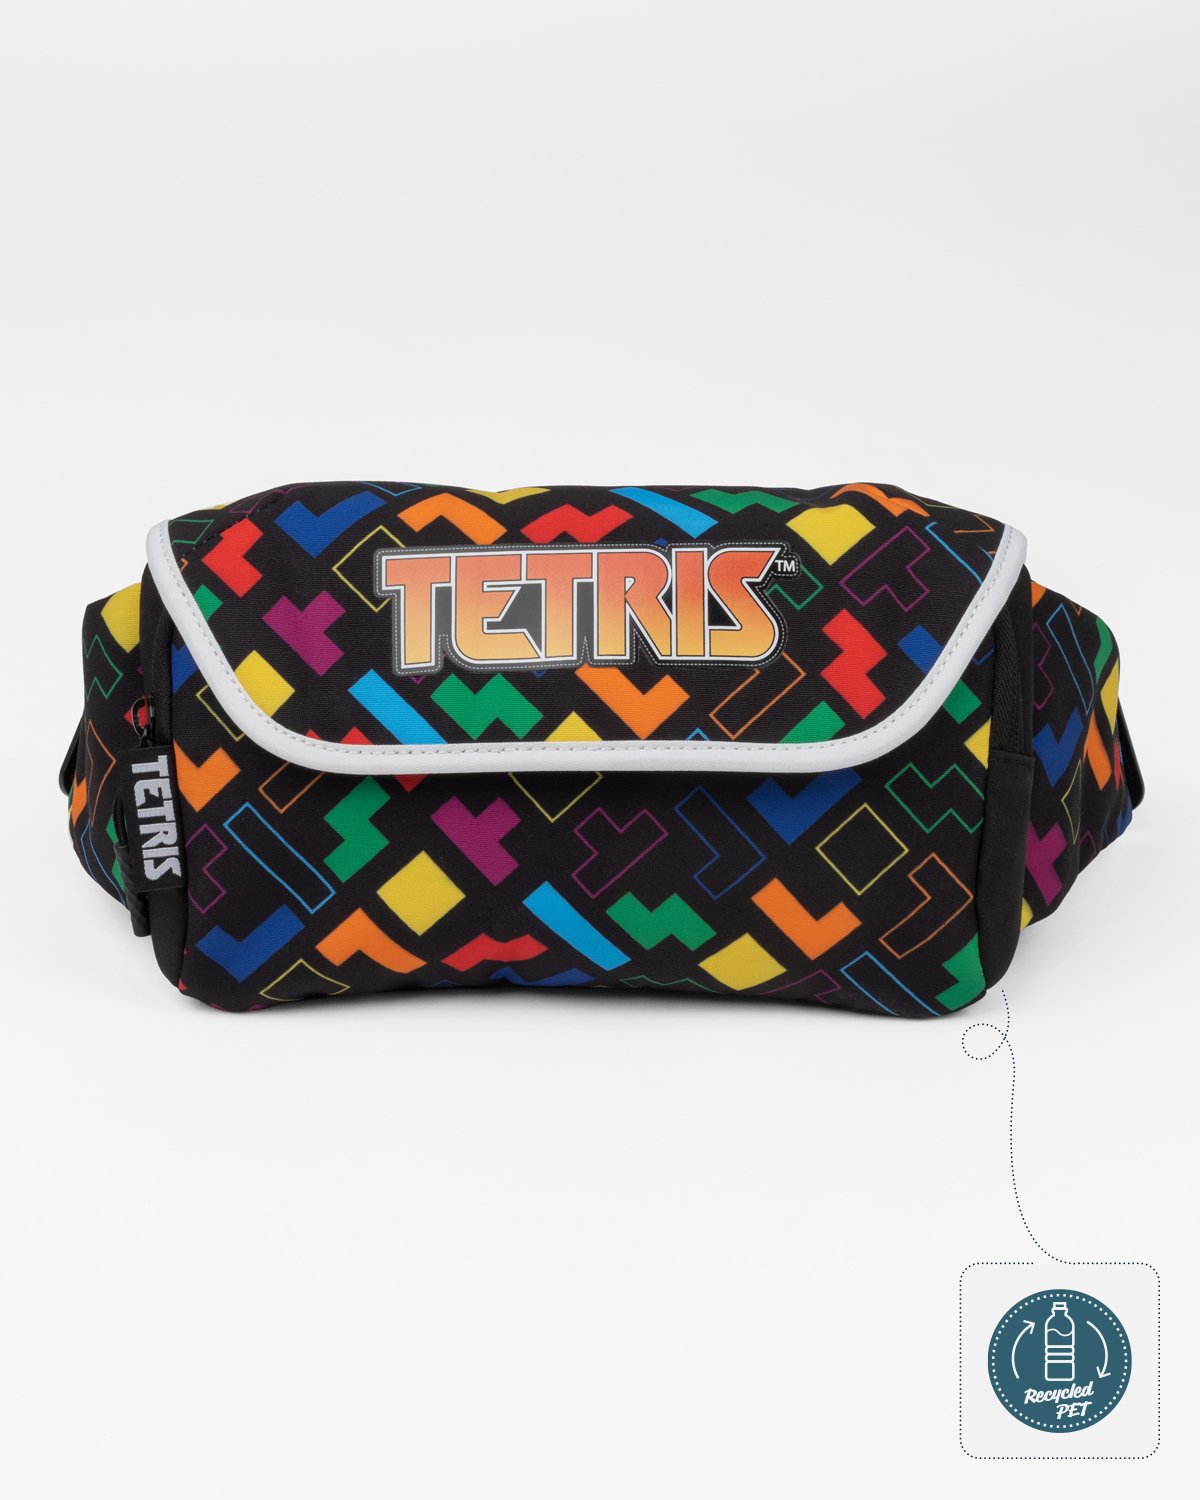 Tetris Fanny Bag "Colored Game"